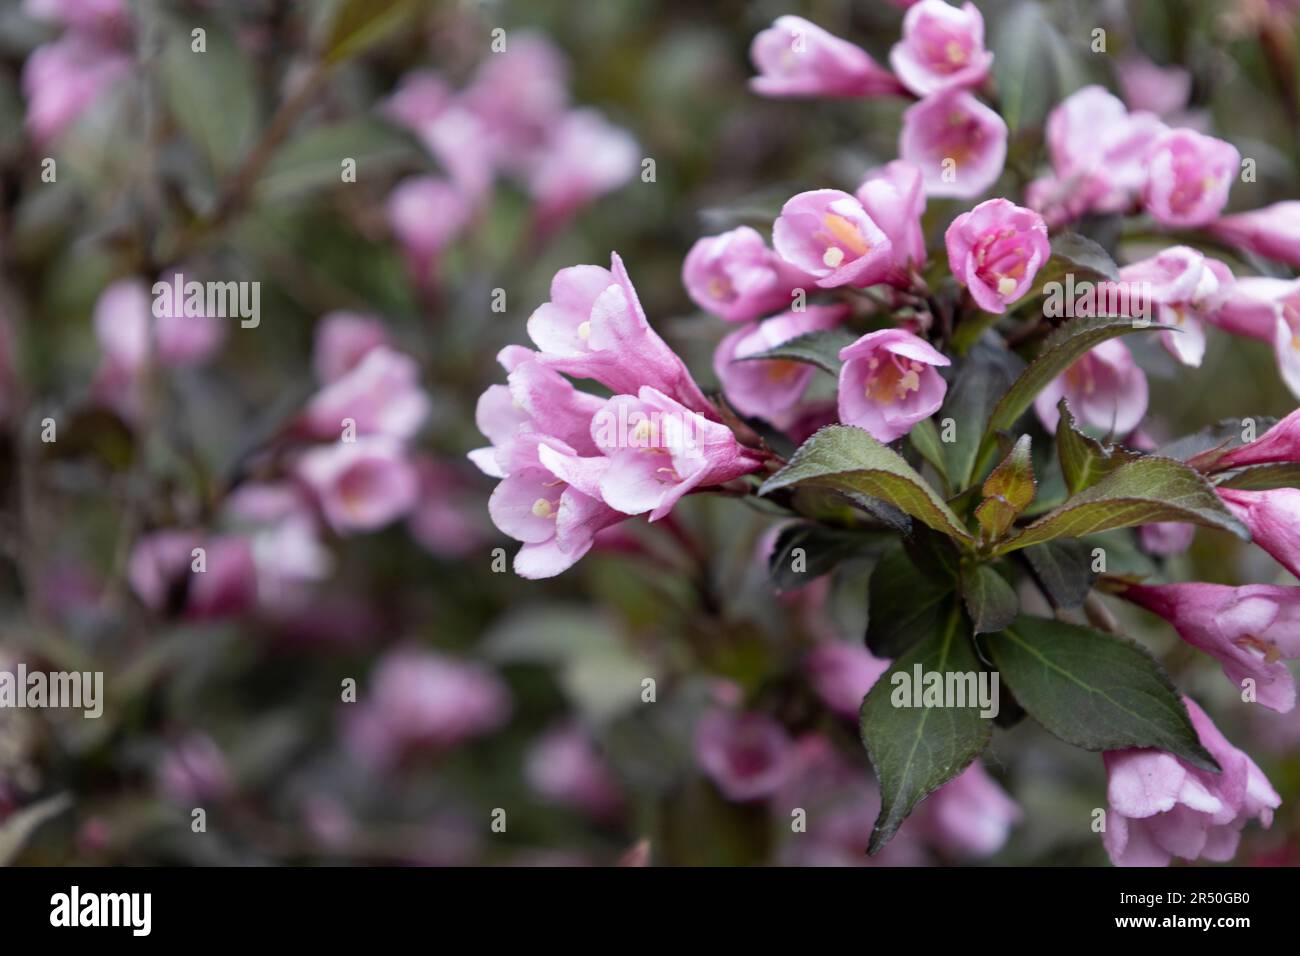 Beautiful flowers Weigela nana purpurea on blurry background. Amazing plant with pink flowers on the bush. Stock Photo